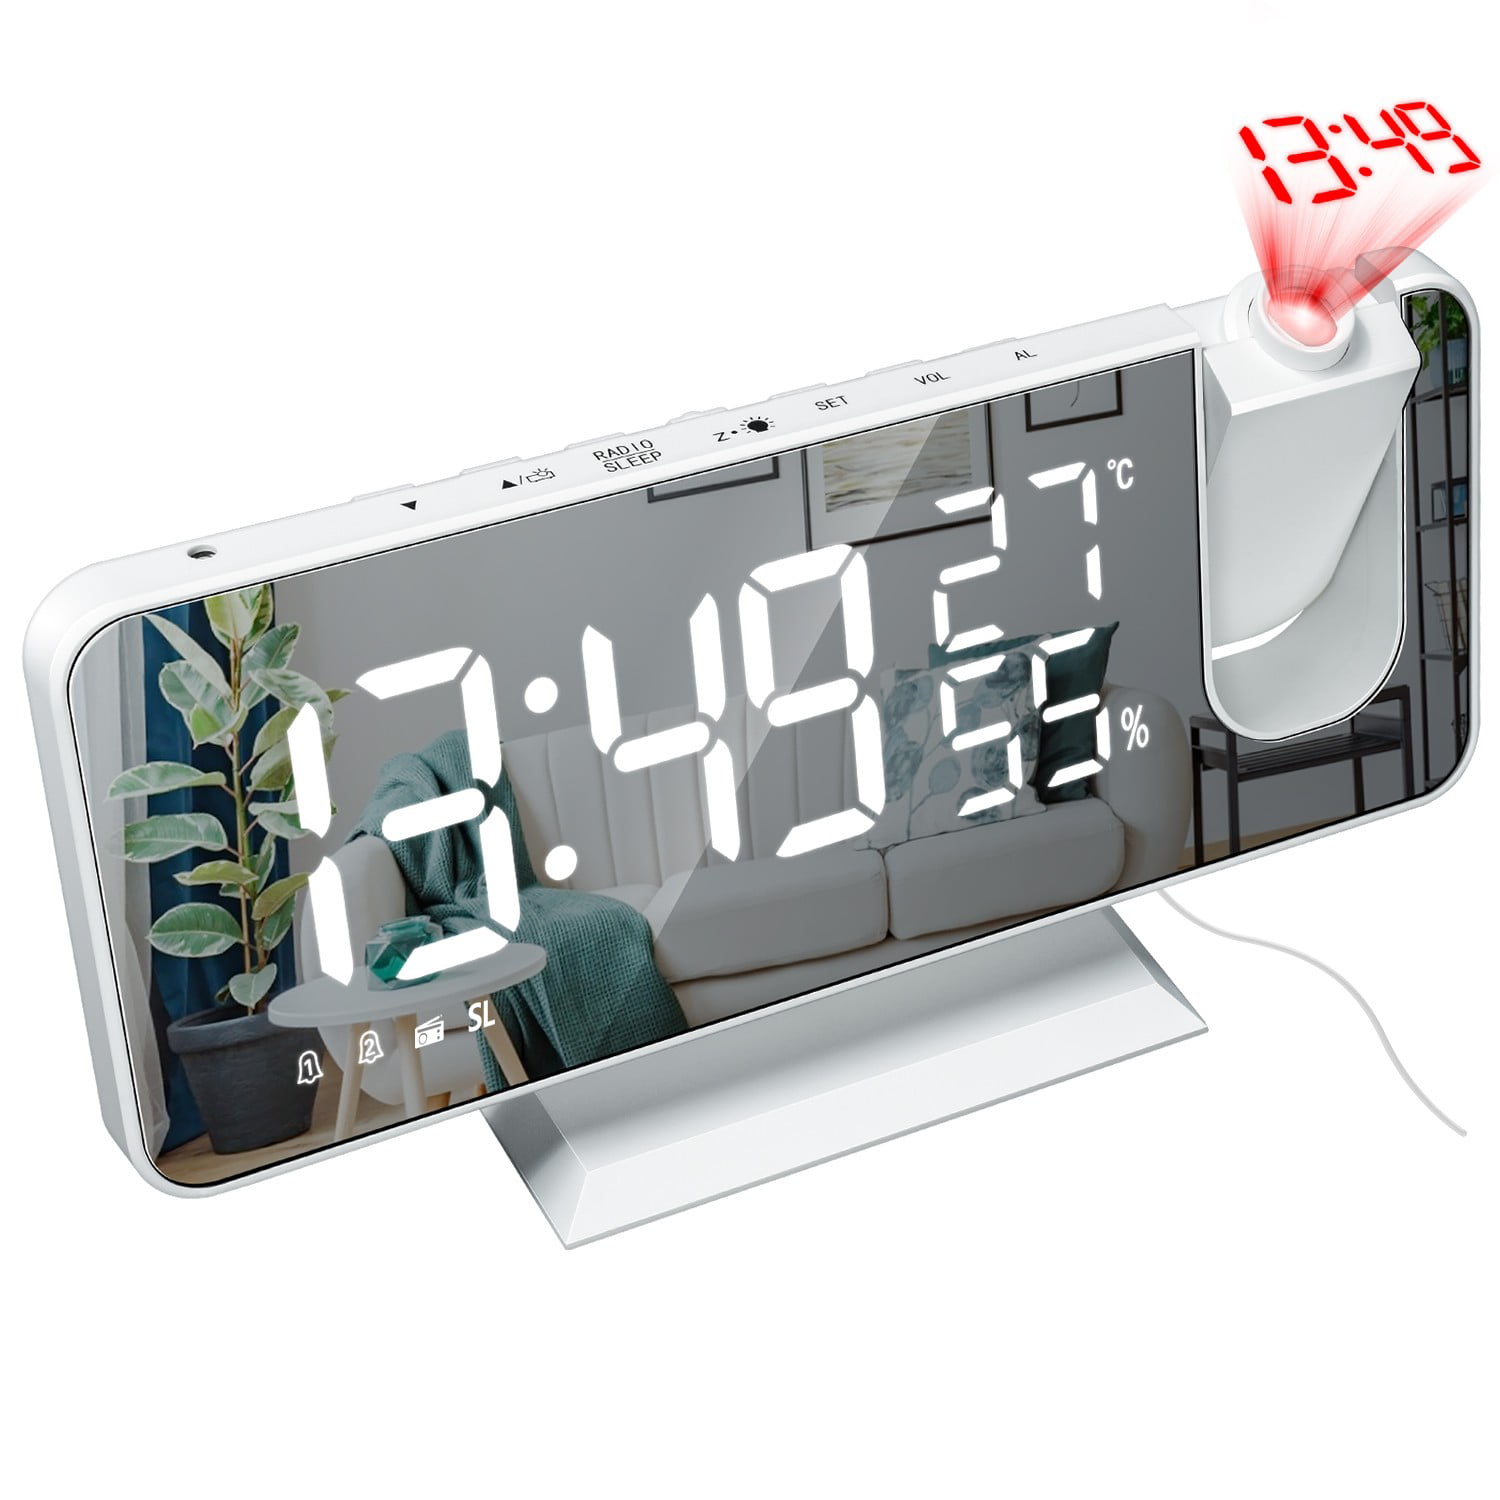 Black Digital Alarm Clock Projection Alarm Clock with 7.3Inch LED Radio 180° Projector Modern Mirror Surface Alarm Clock with Snooze Function/2 Alarm Sounds/4 Dimmer/USB Phone Charg-er